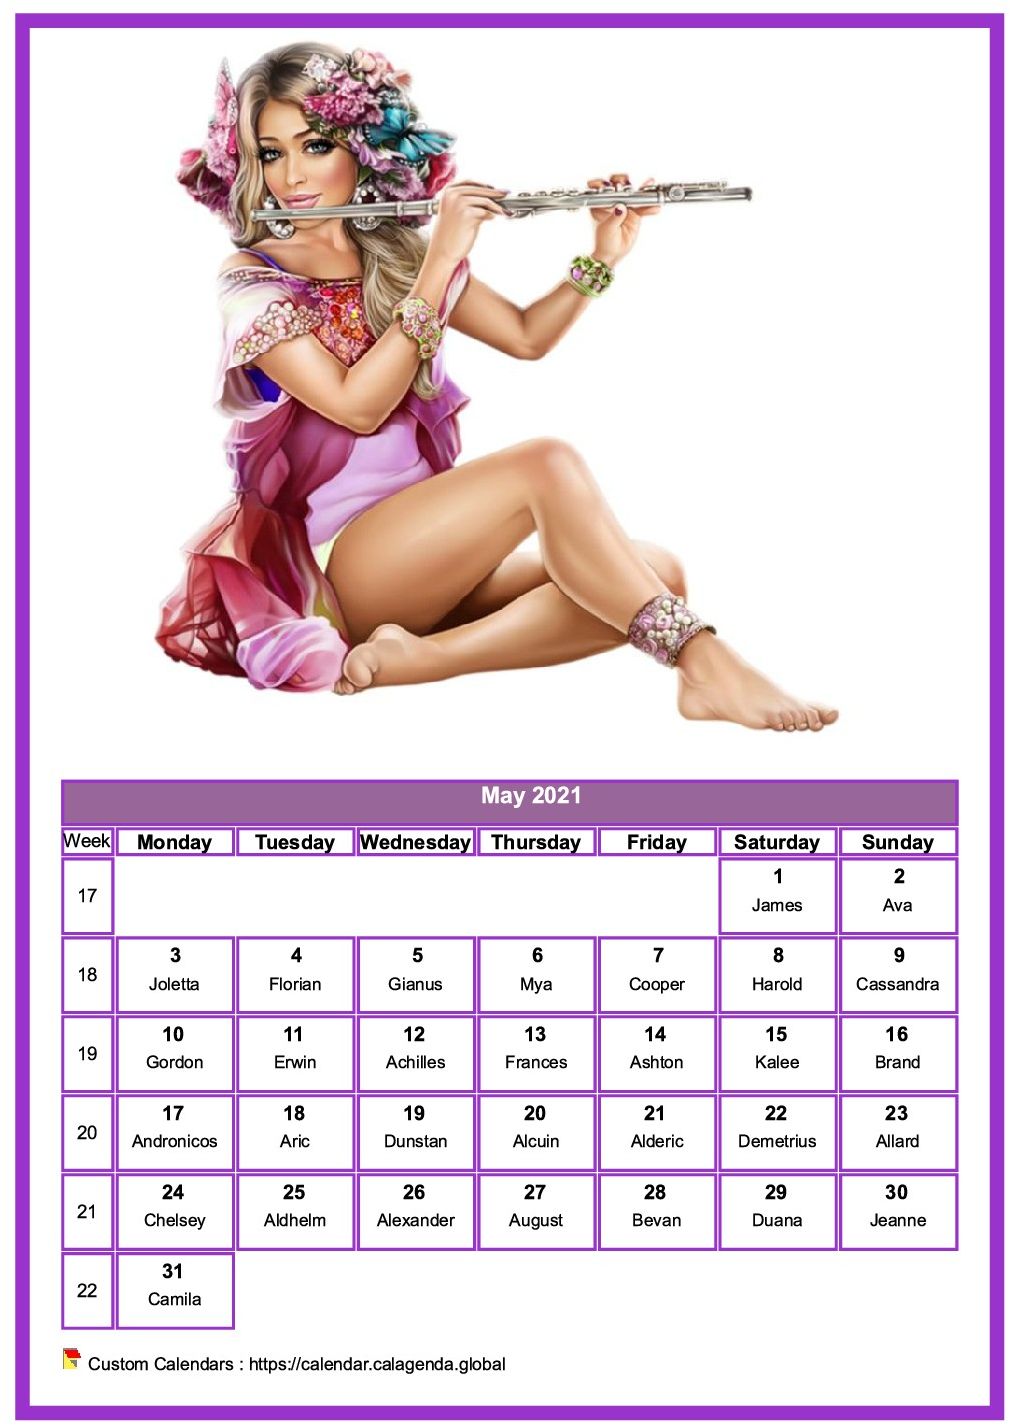 Calendar May 2021 women